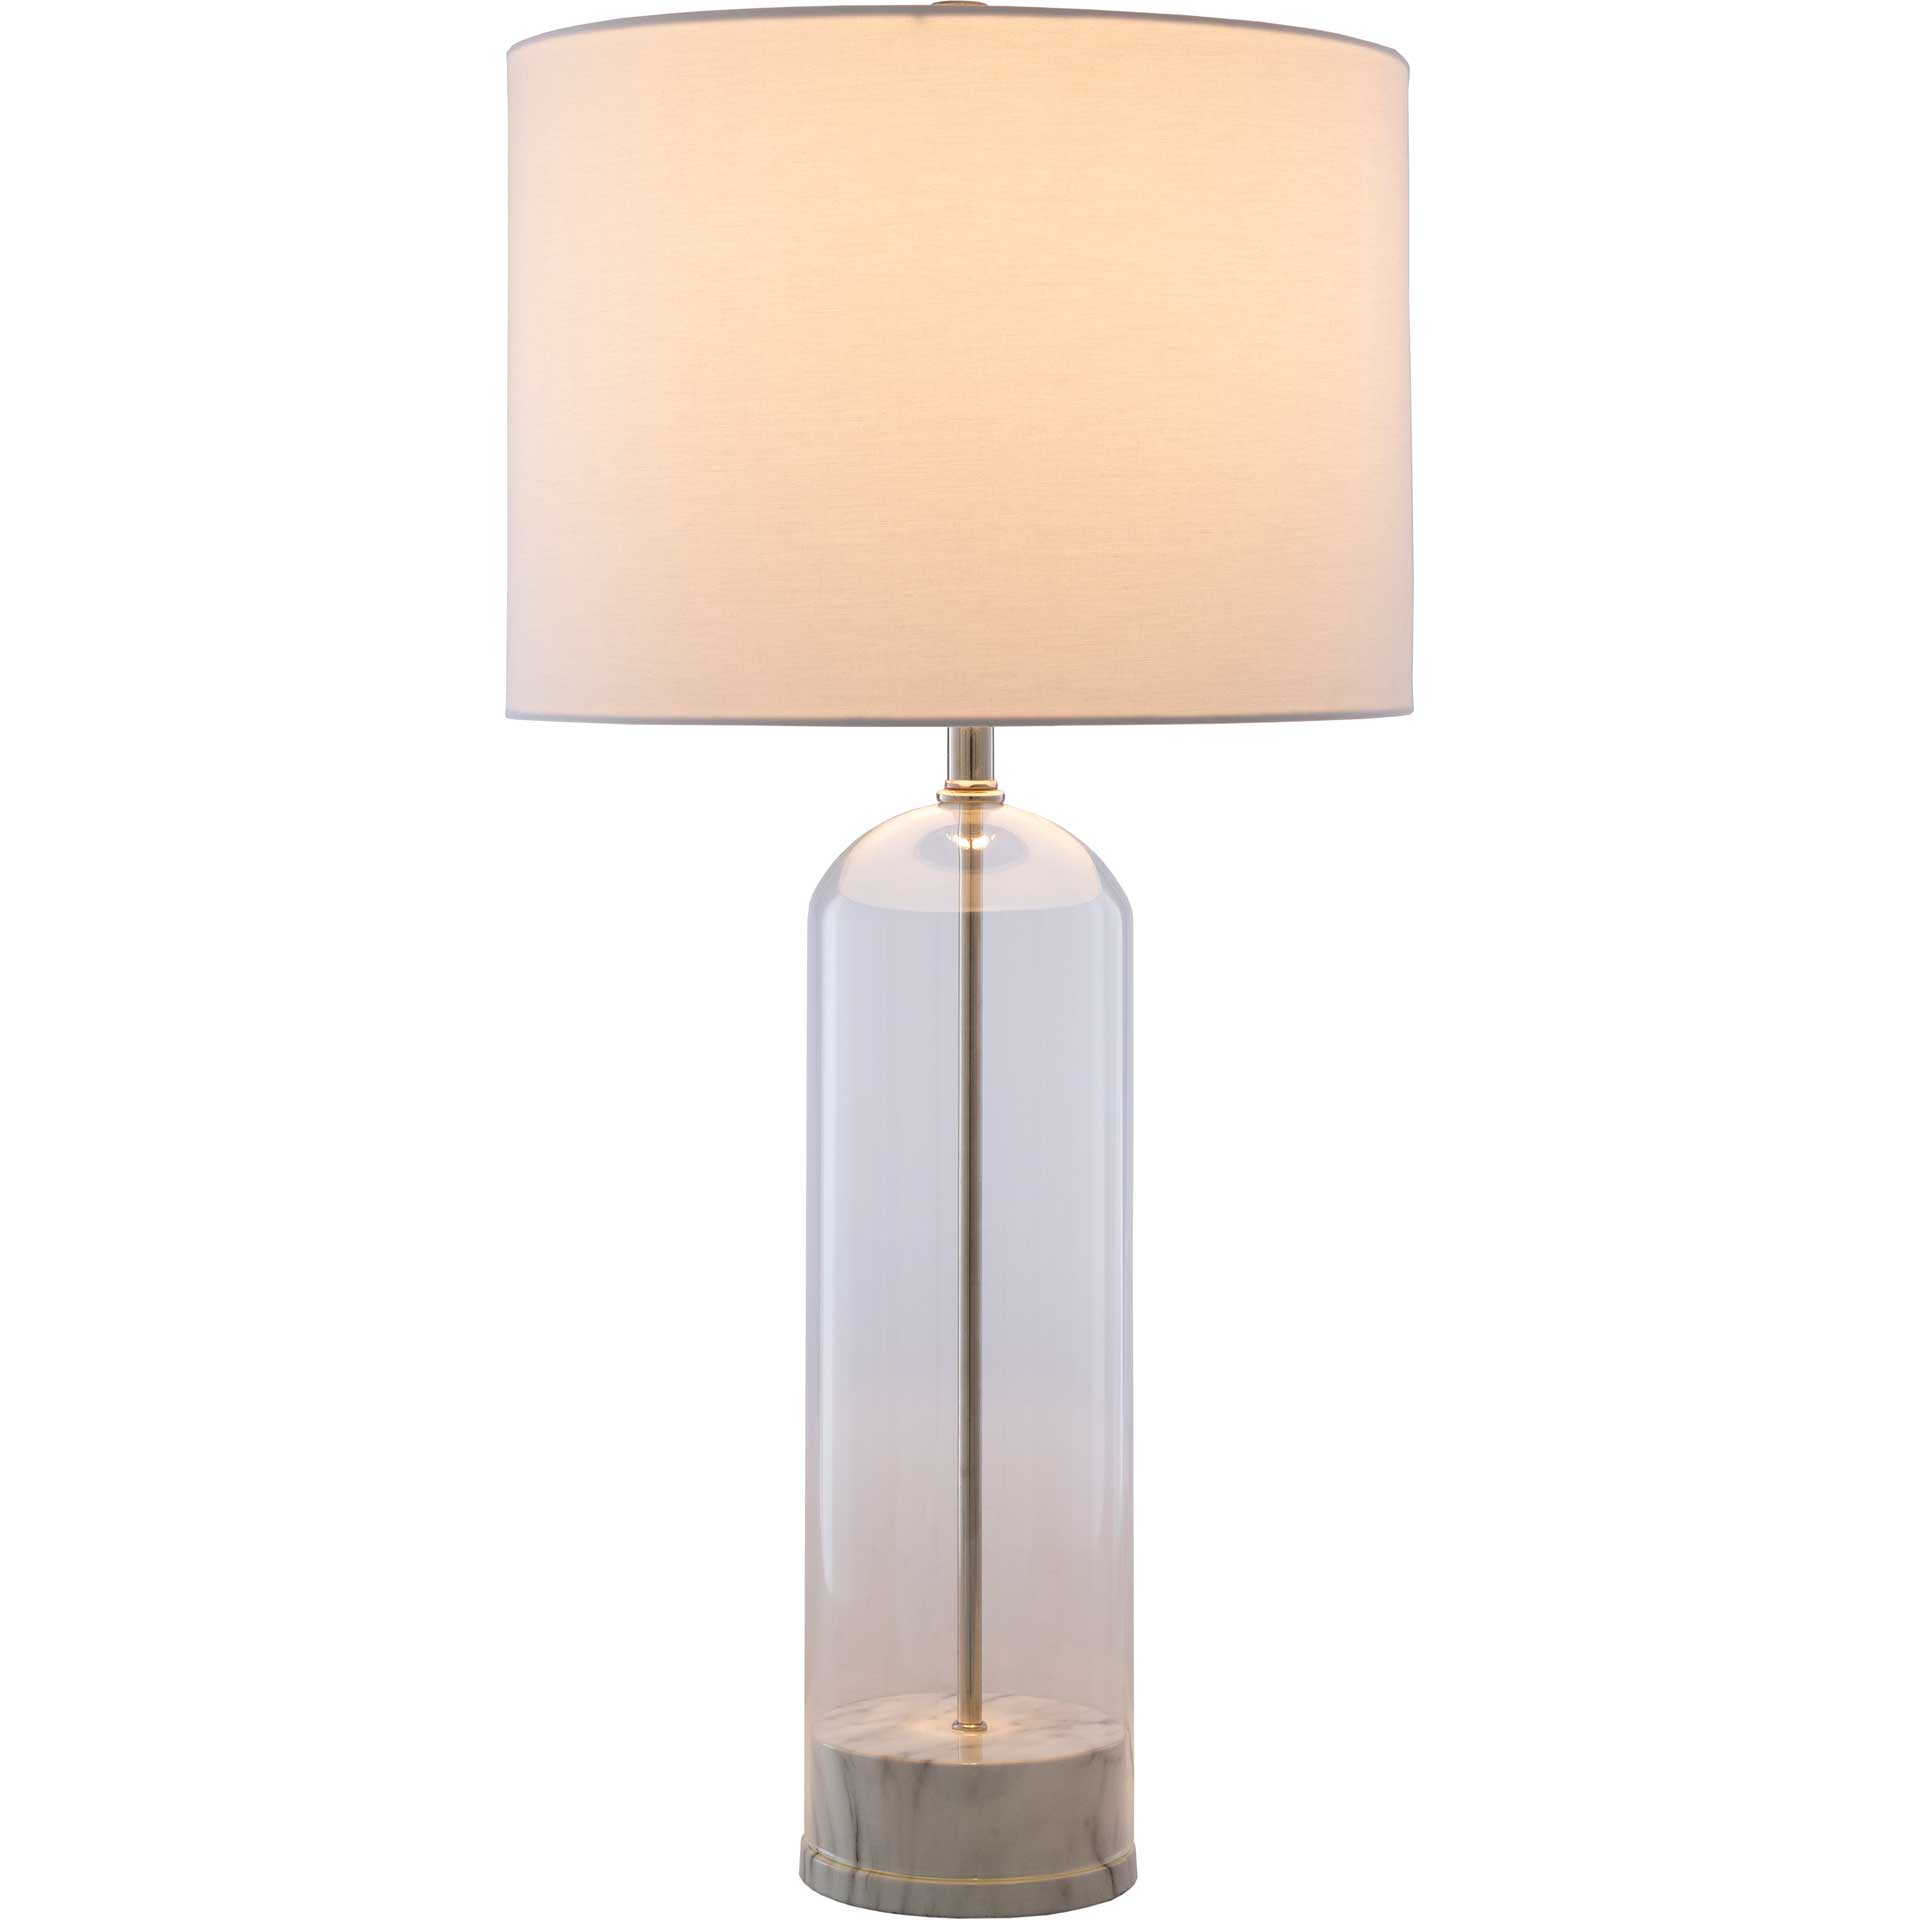 Carlos Table Lamp White/Light Gray